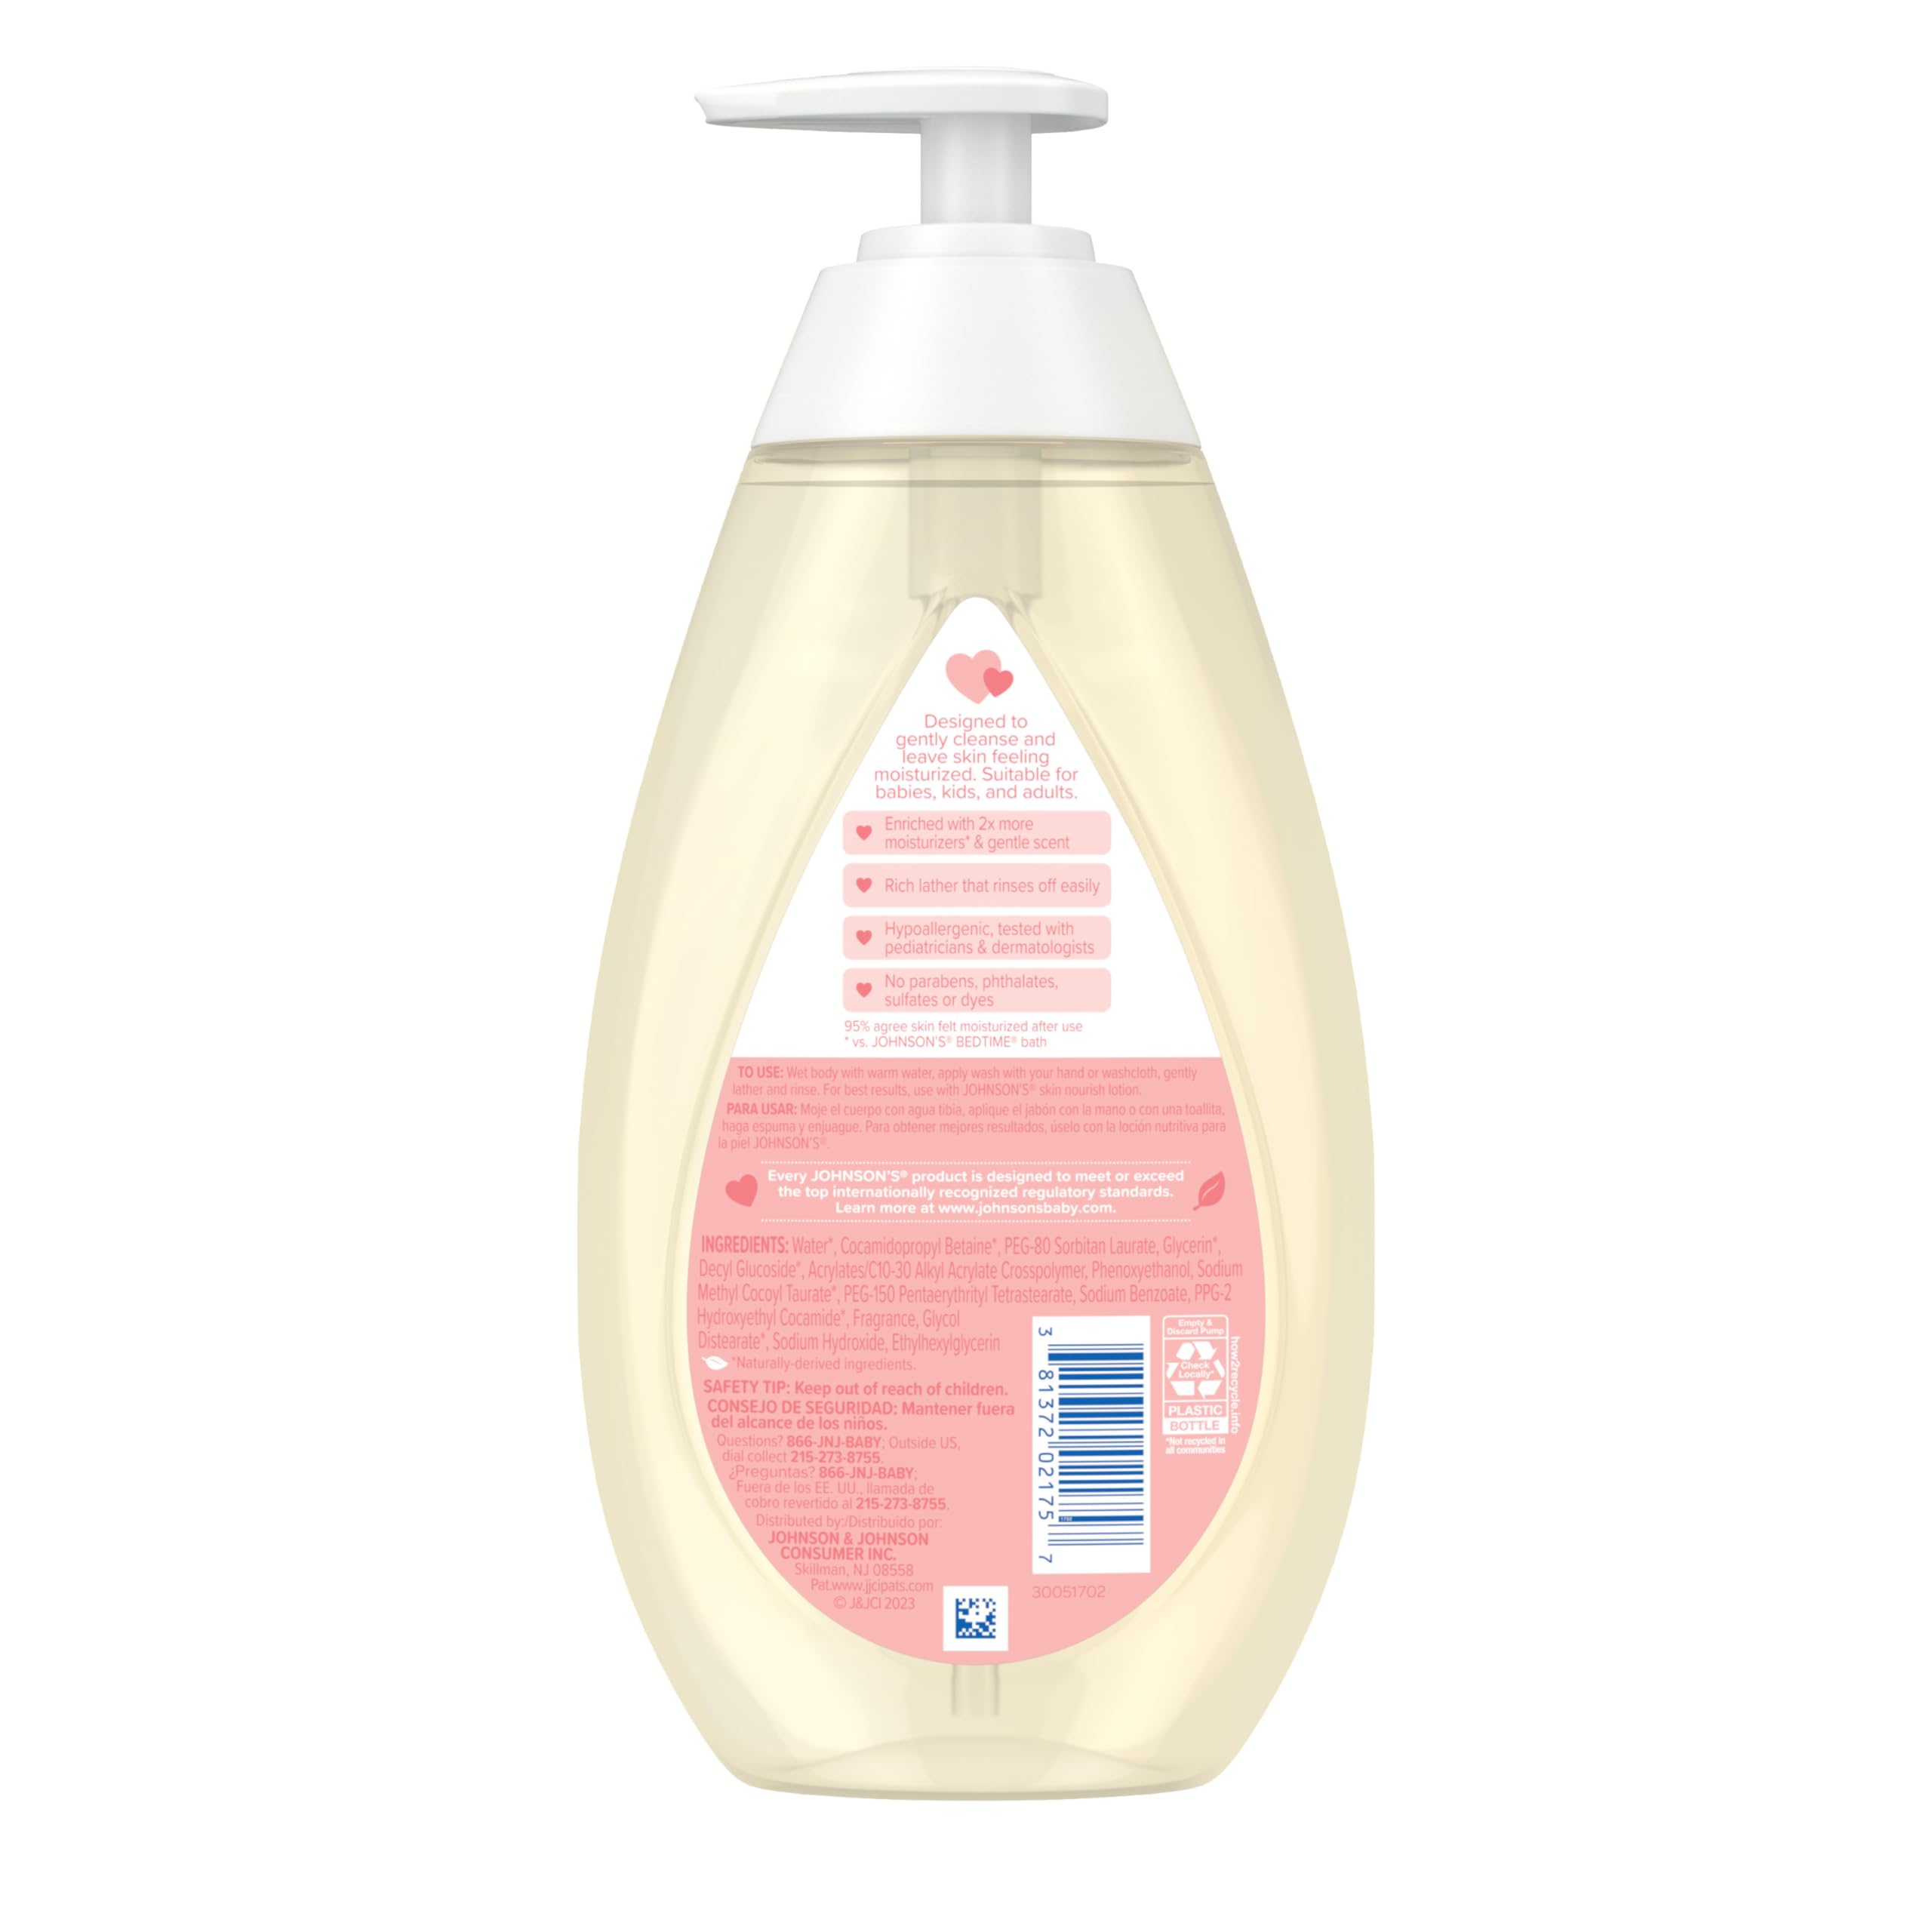 Johnson's Skin Nourish Moisture Wash, Baby Wash with Coconut & Honeysuckle Scents Cleanses & Leaves Skin Moisturized, Hypoallergenic Body Wash, Paraben-, Dye- & Sulfate-Free, 20.3 fl. oz